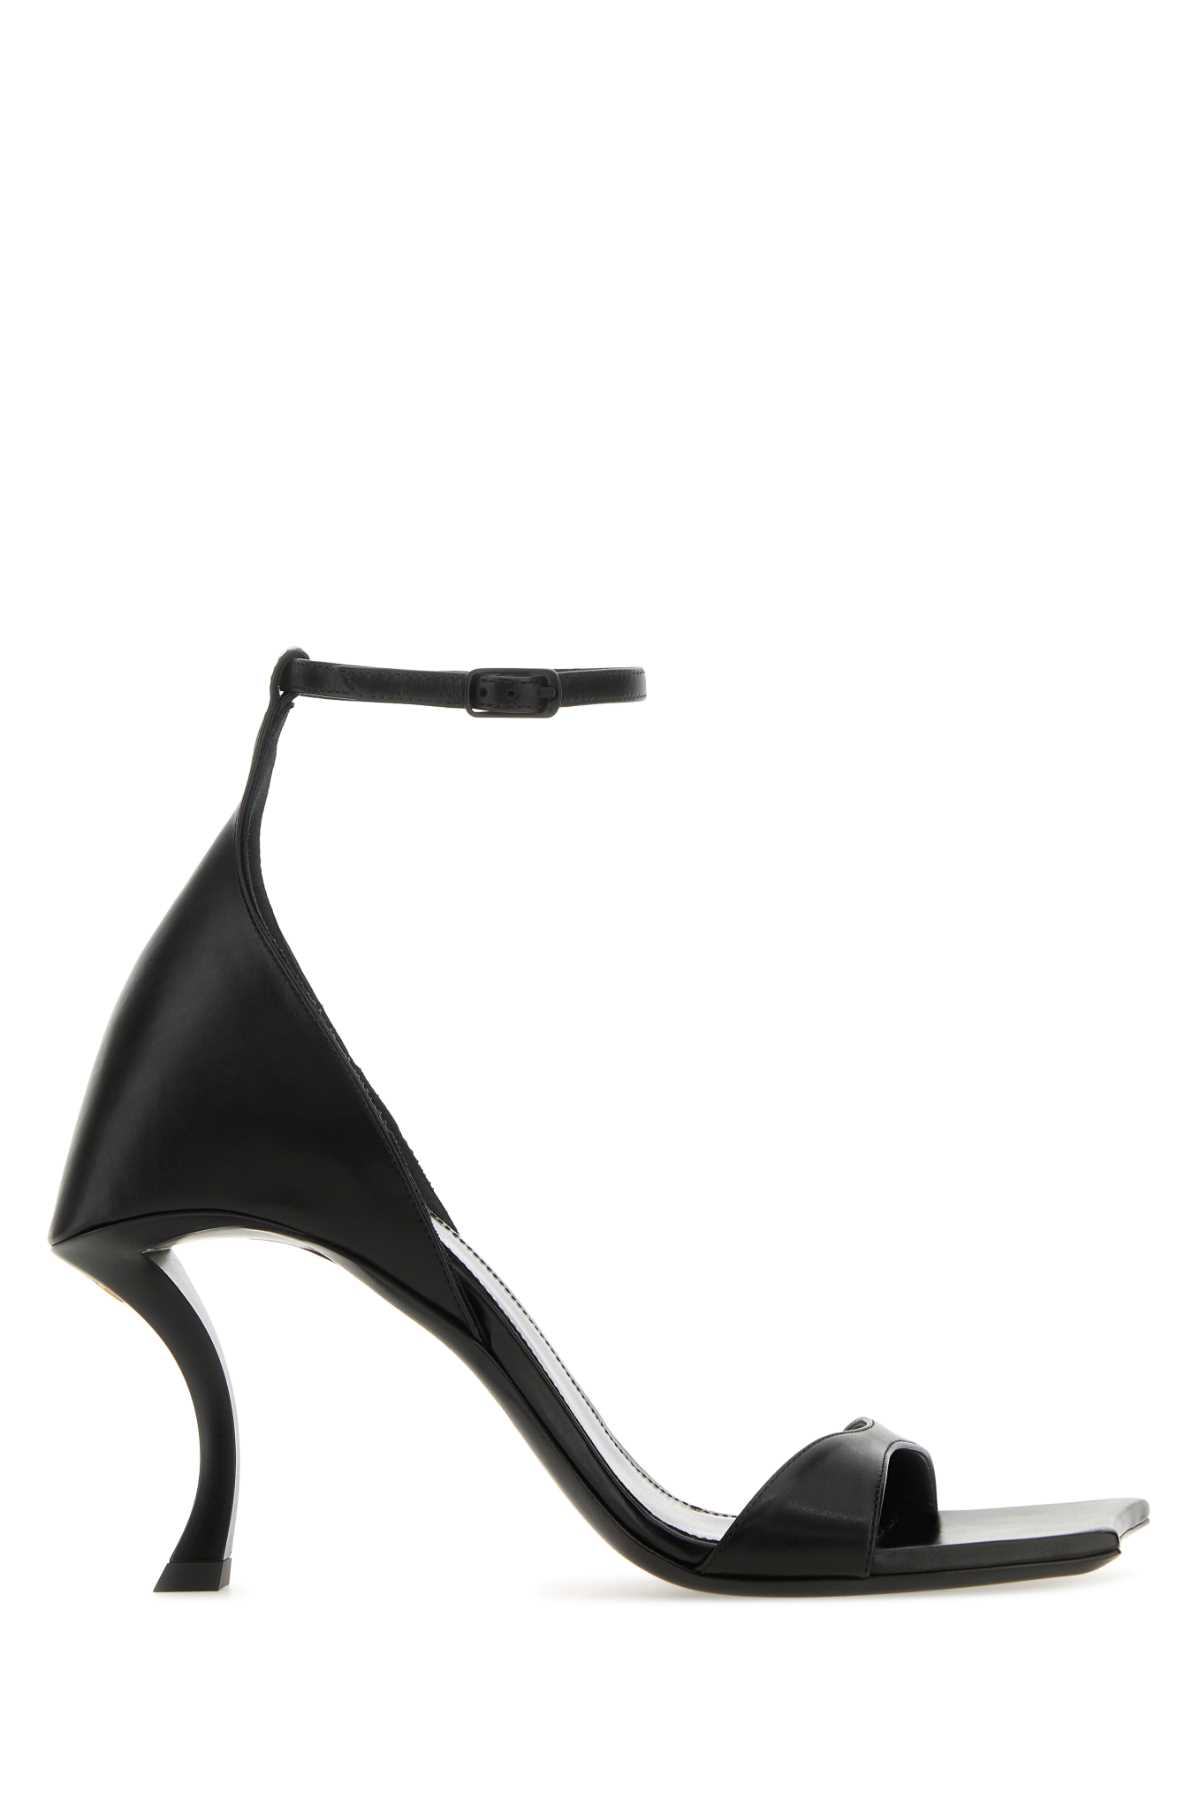 Shop Balenciaga Black Leather Hourglass Sandals